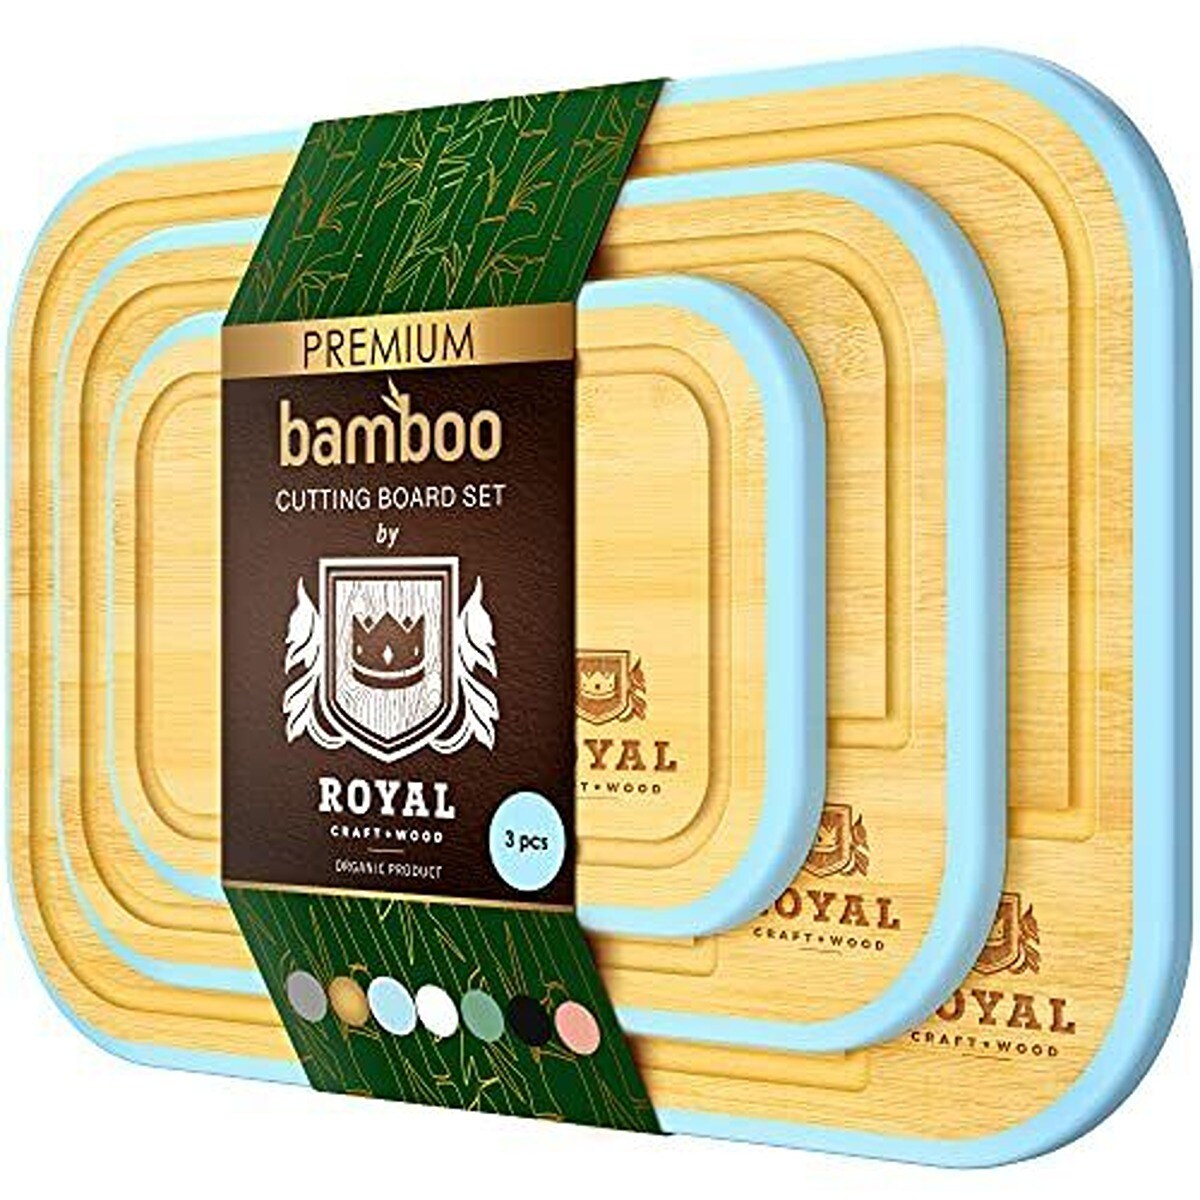 ROYAL CRAFT WOOD Premium Bamboo Cutting Board Set